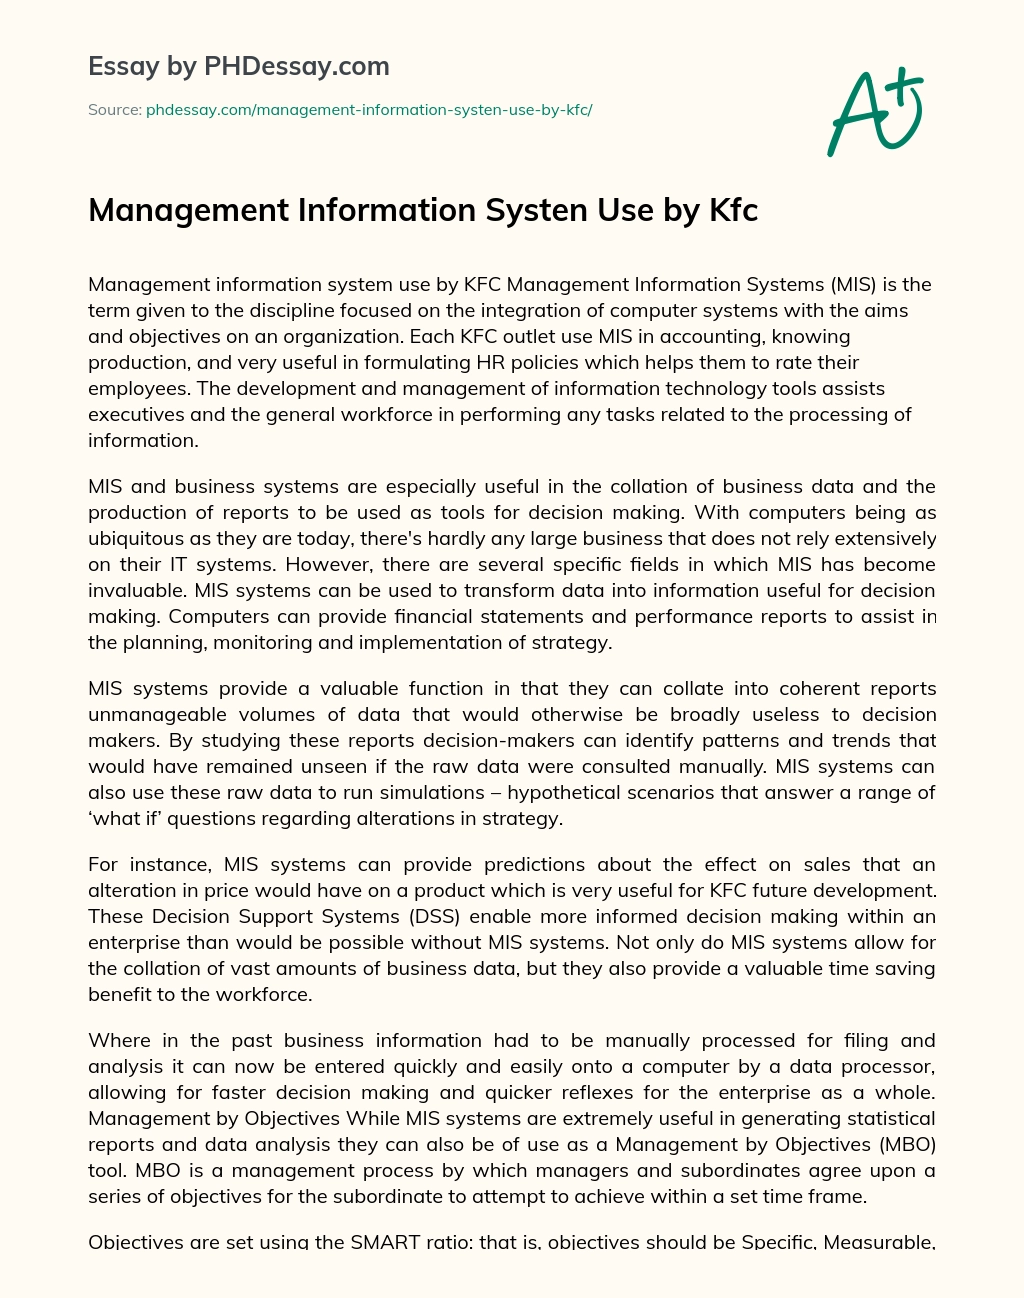 management information system of kfc pdf